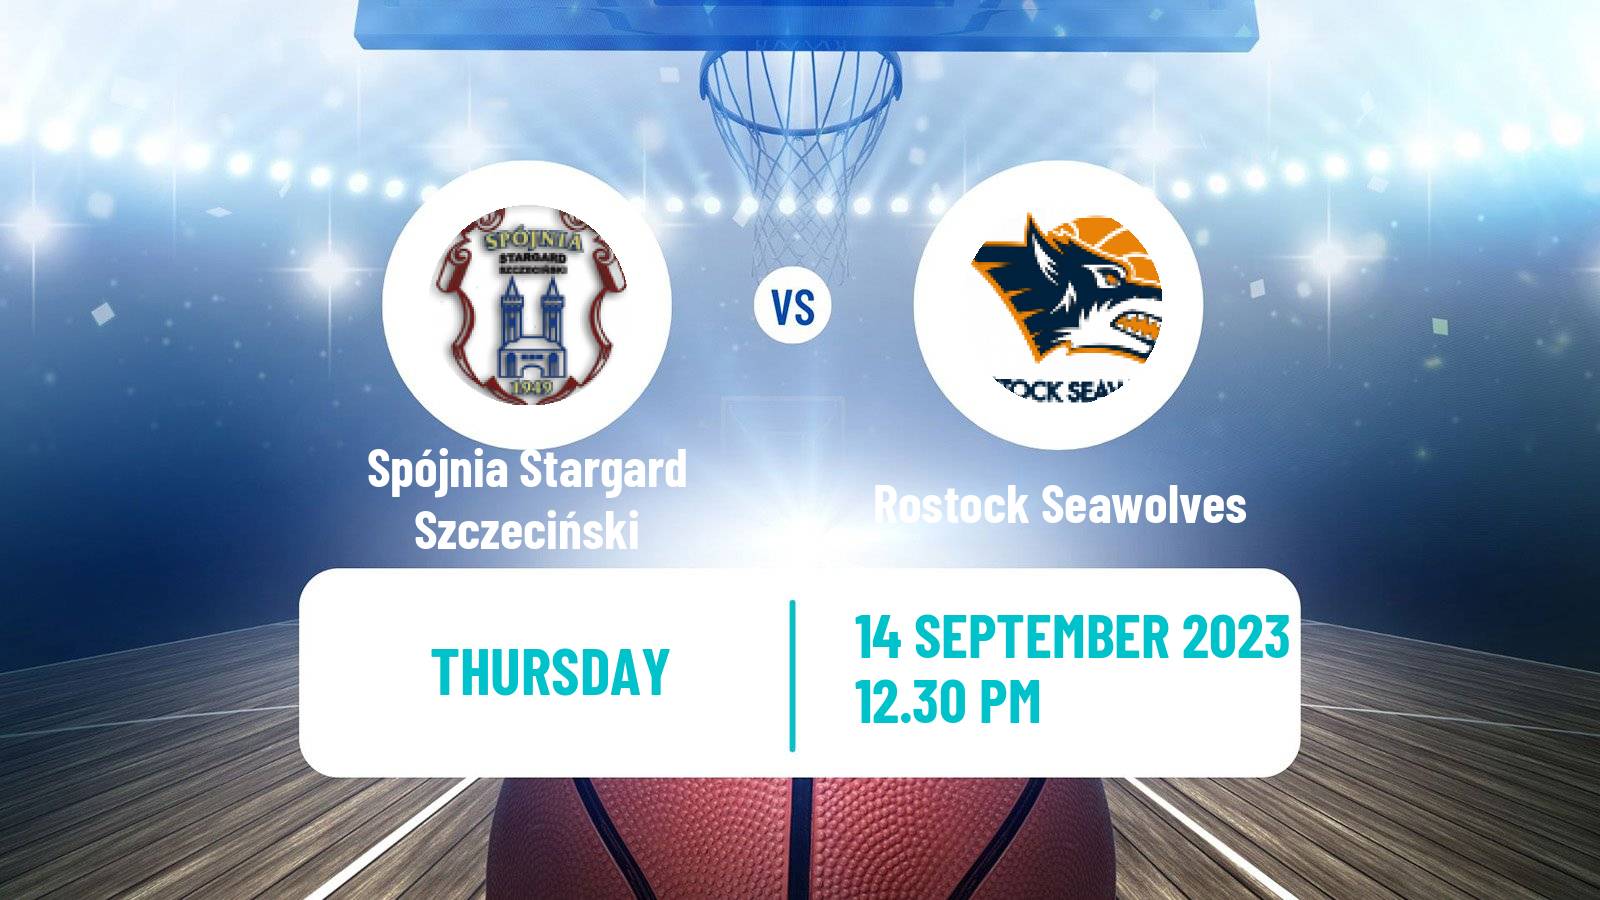 Basketball Club Friendly Basketball Spójnia Stargard Szczeciński - Rostock Seawolves